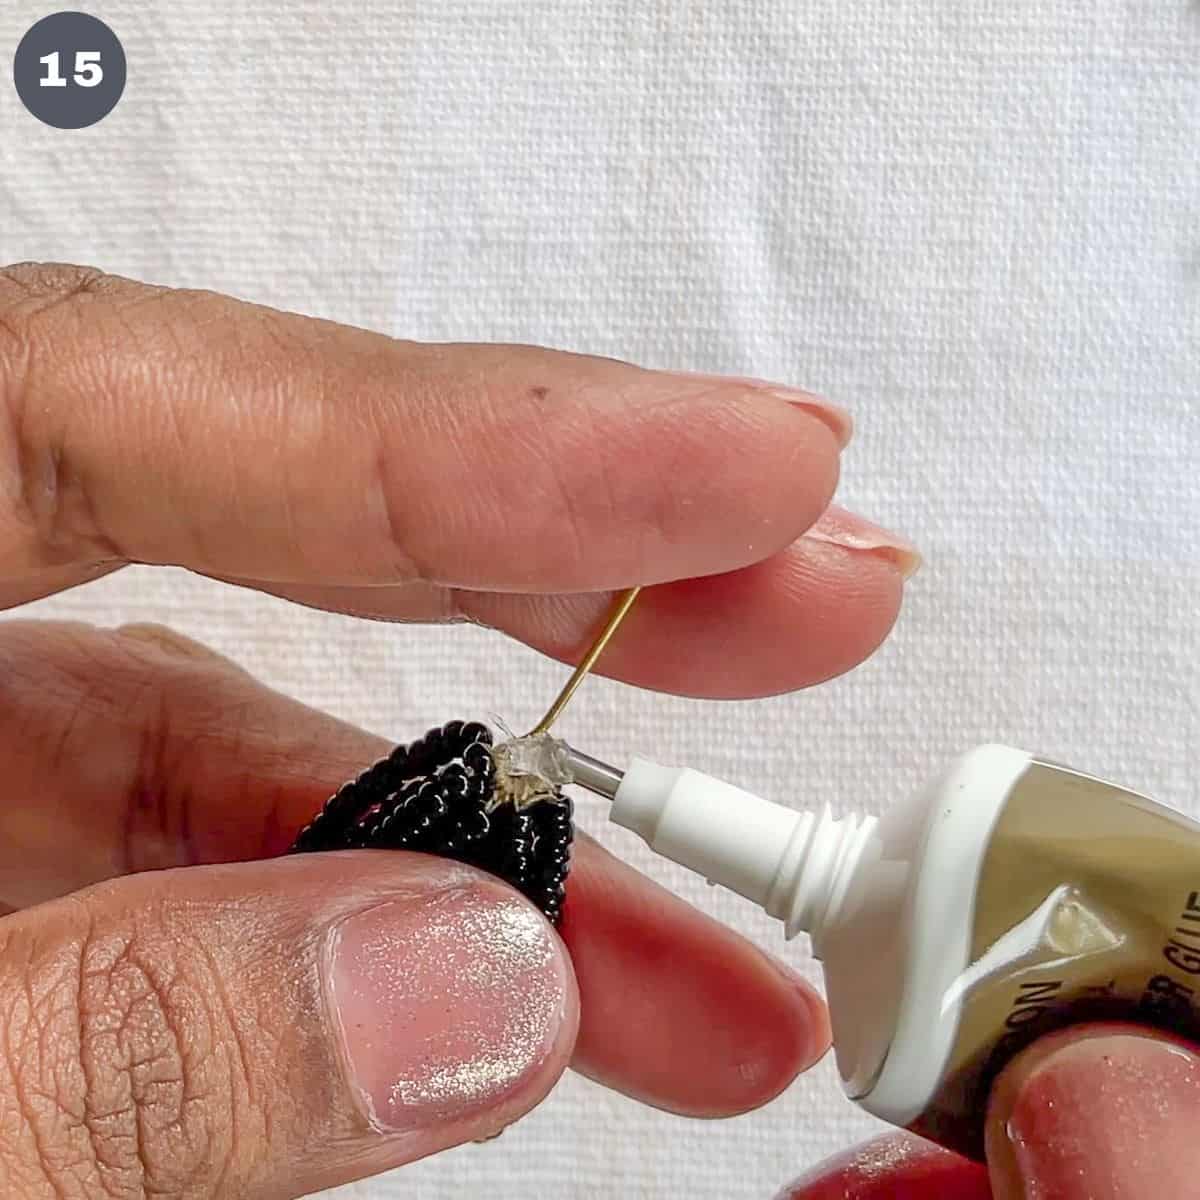 Applying glue to an eye pin.